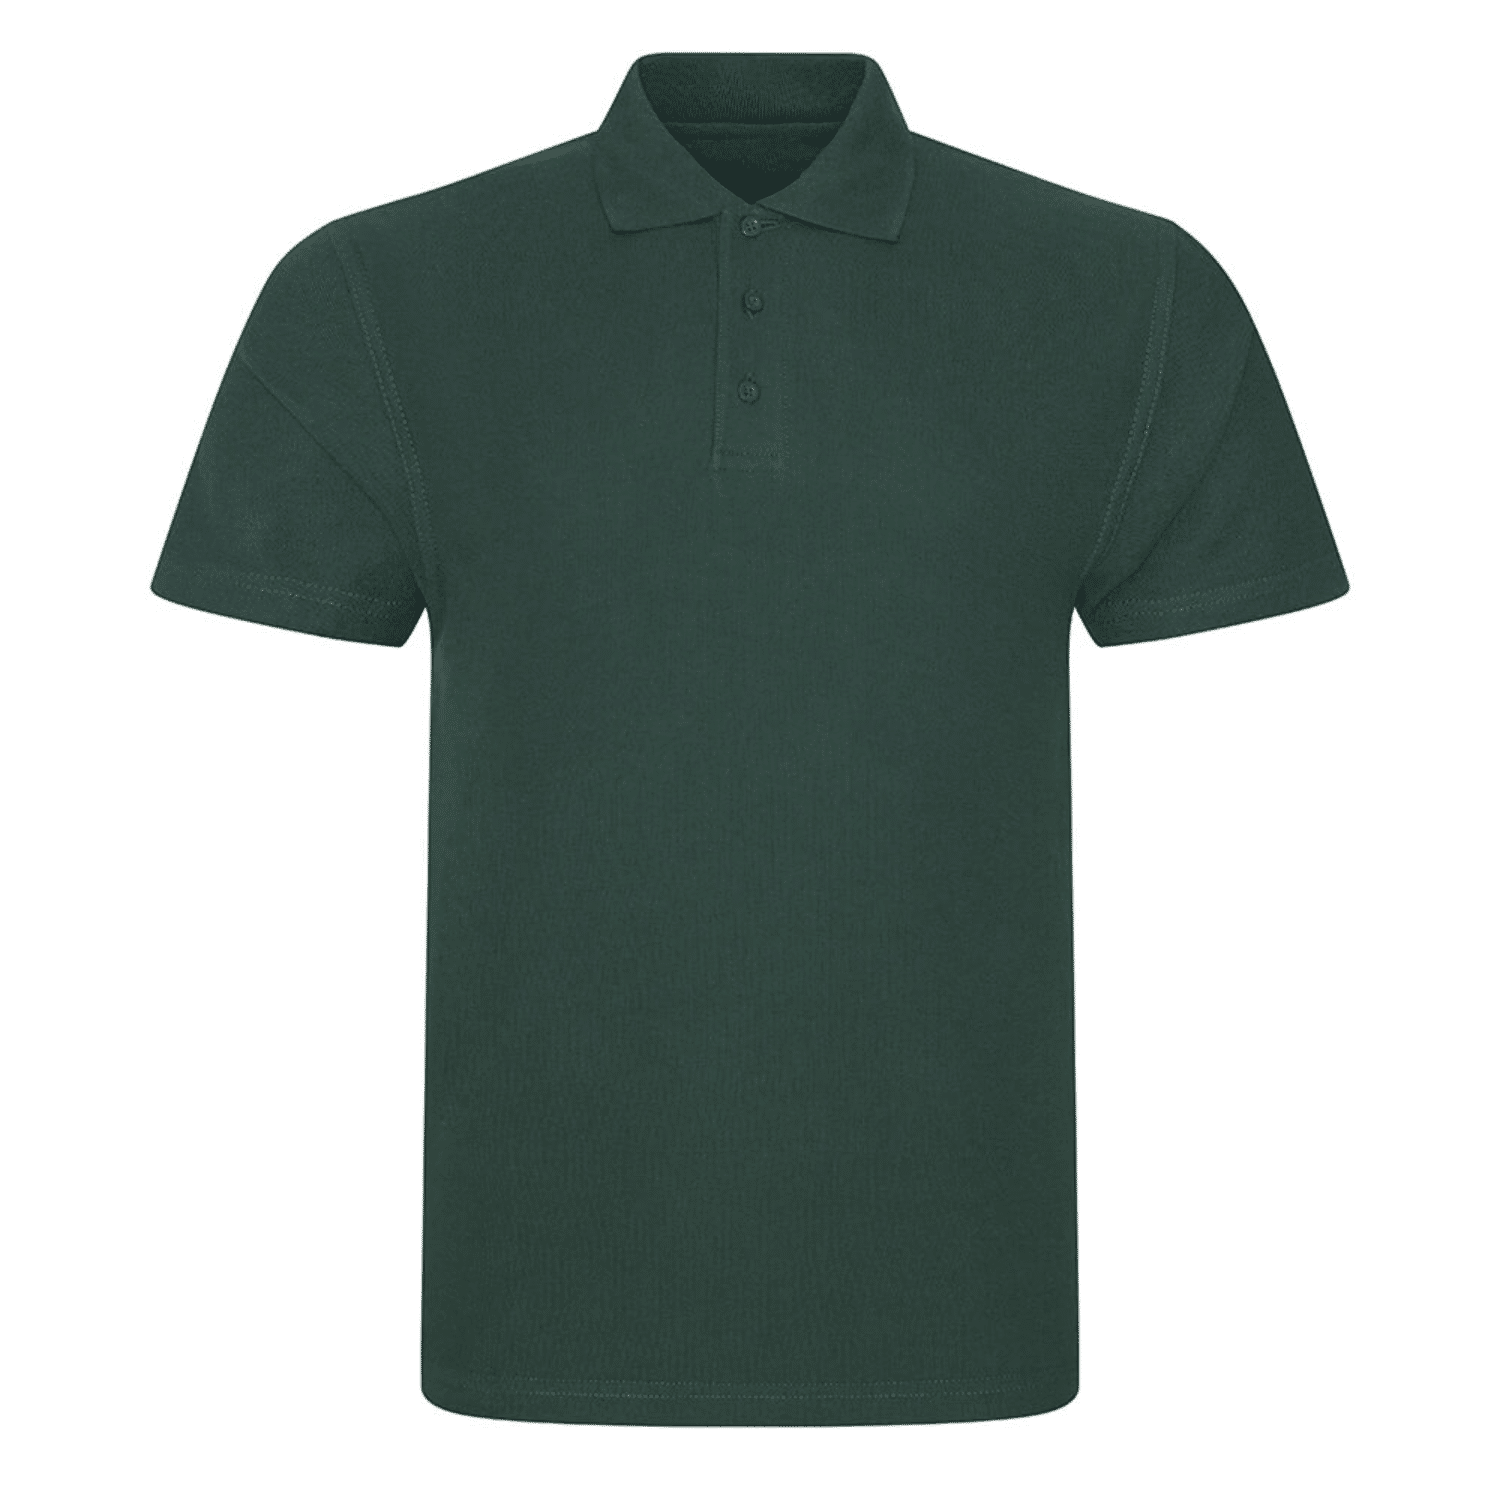 Unisex polo shirt on sale